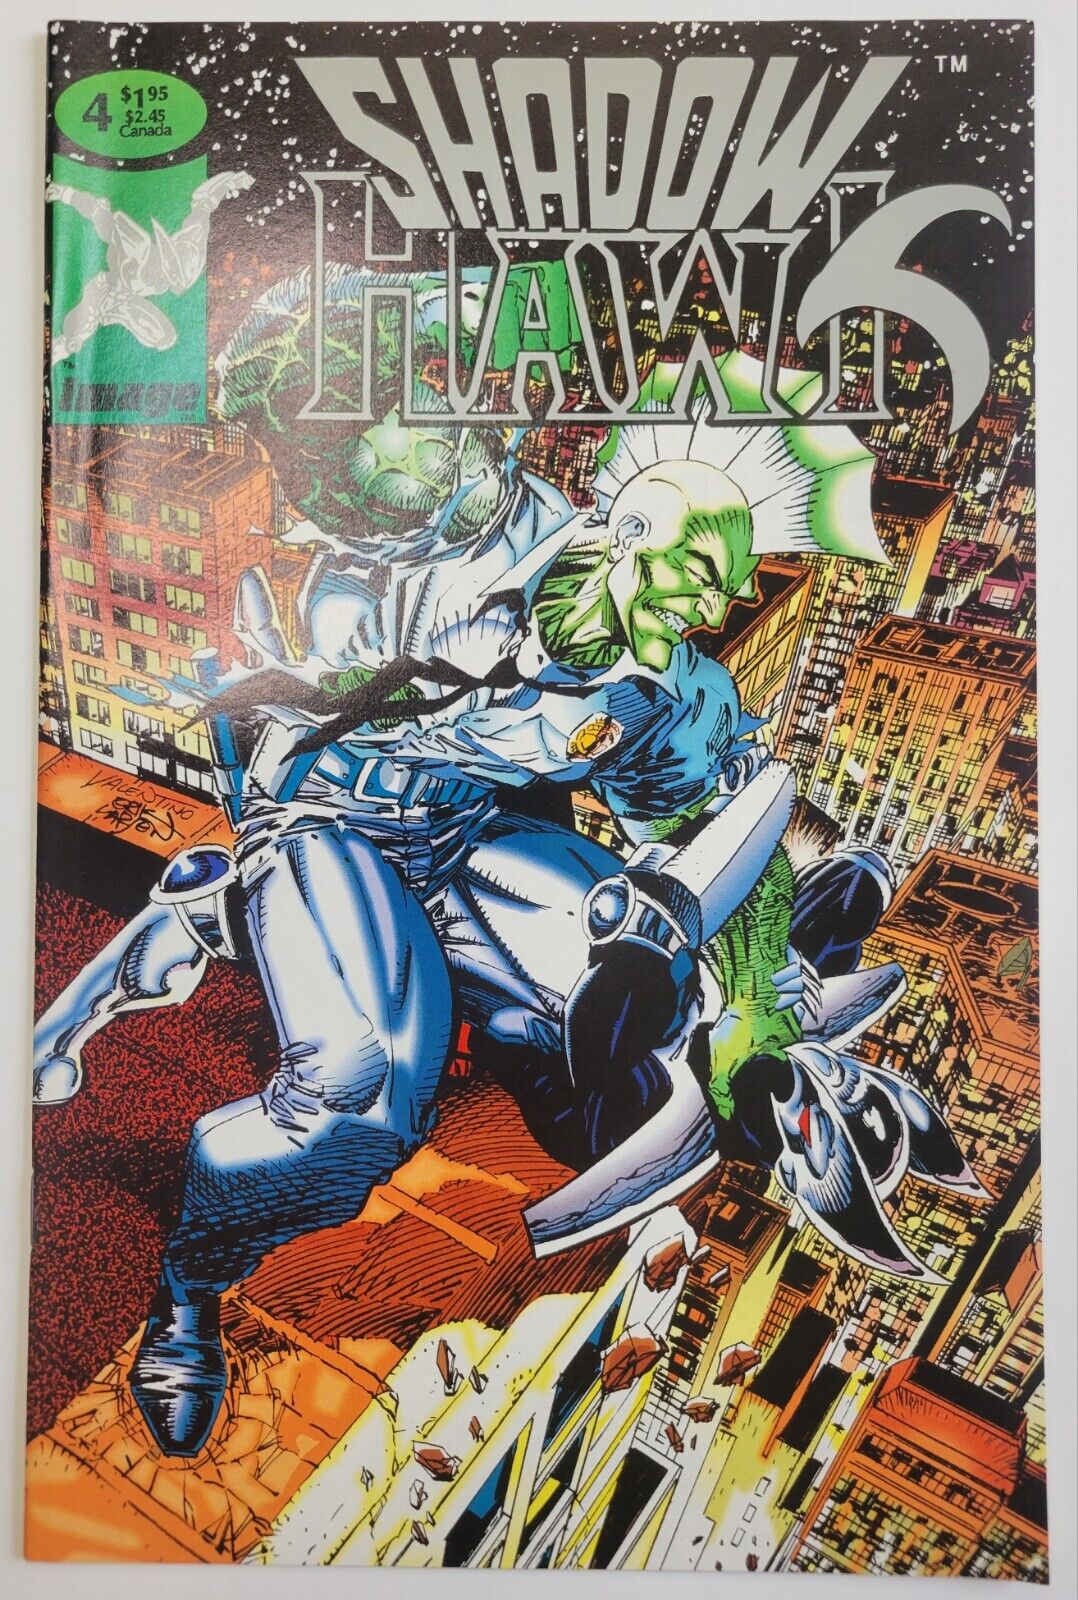 Shadowhawk #4 (1993, Image Comics) VF Erik Larsen Cover, Feat. The Savage Dragon